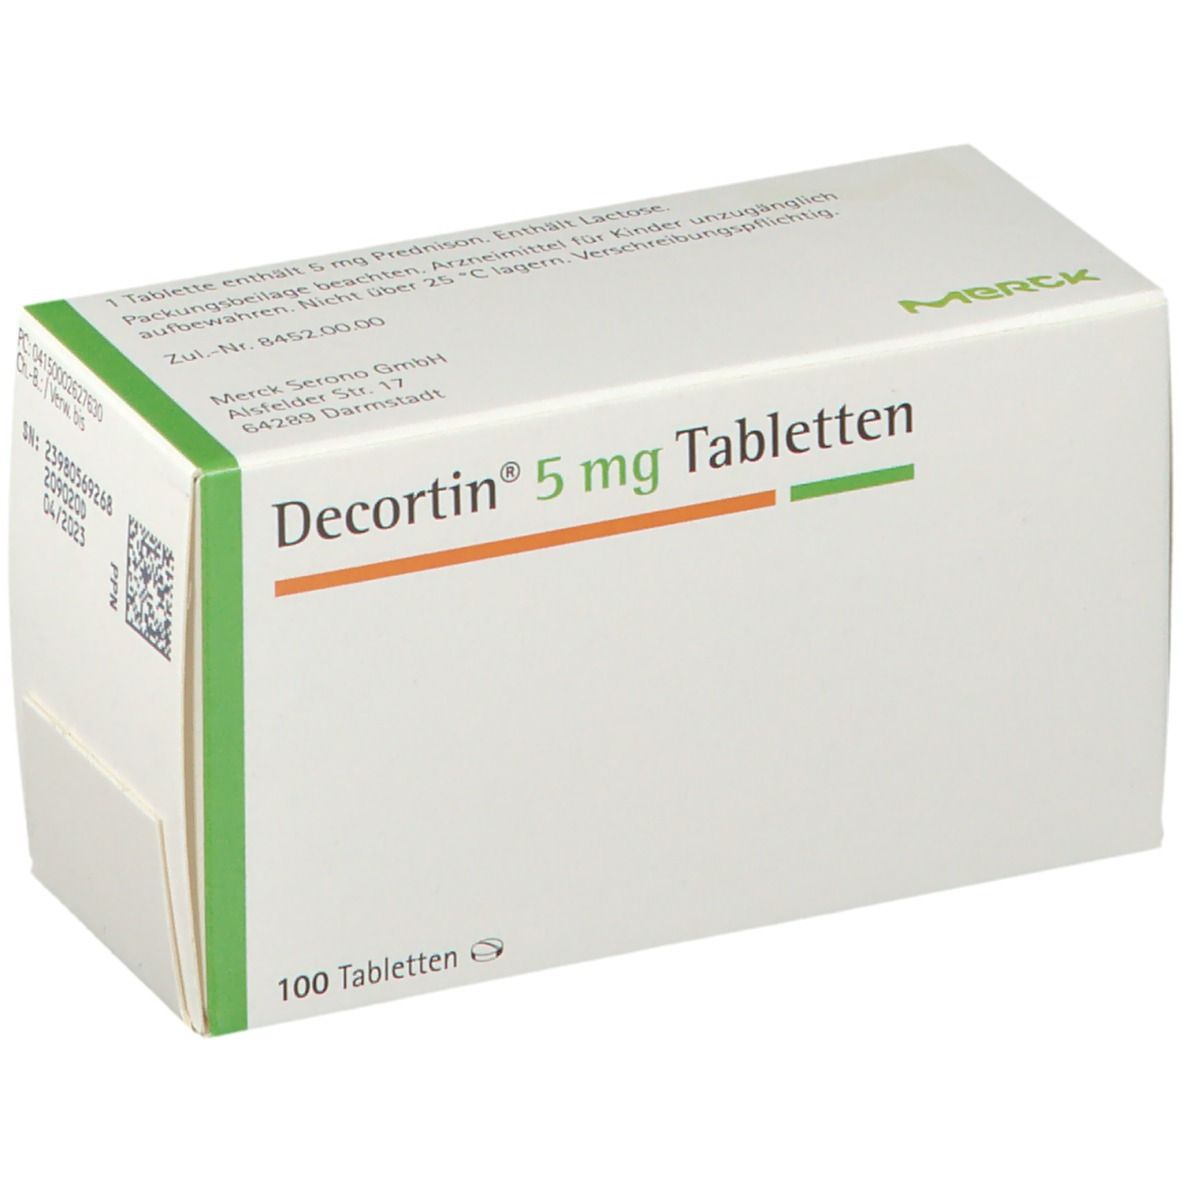 Decortin® 5 mg